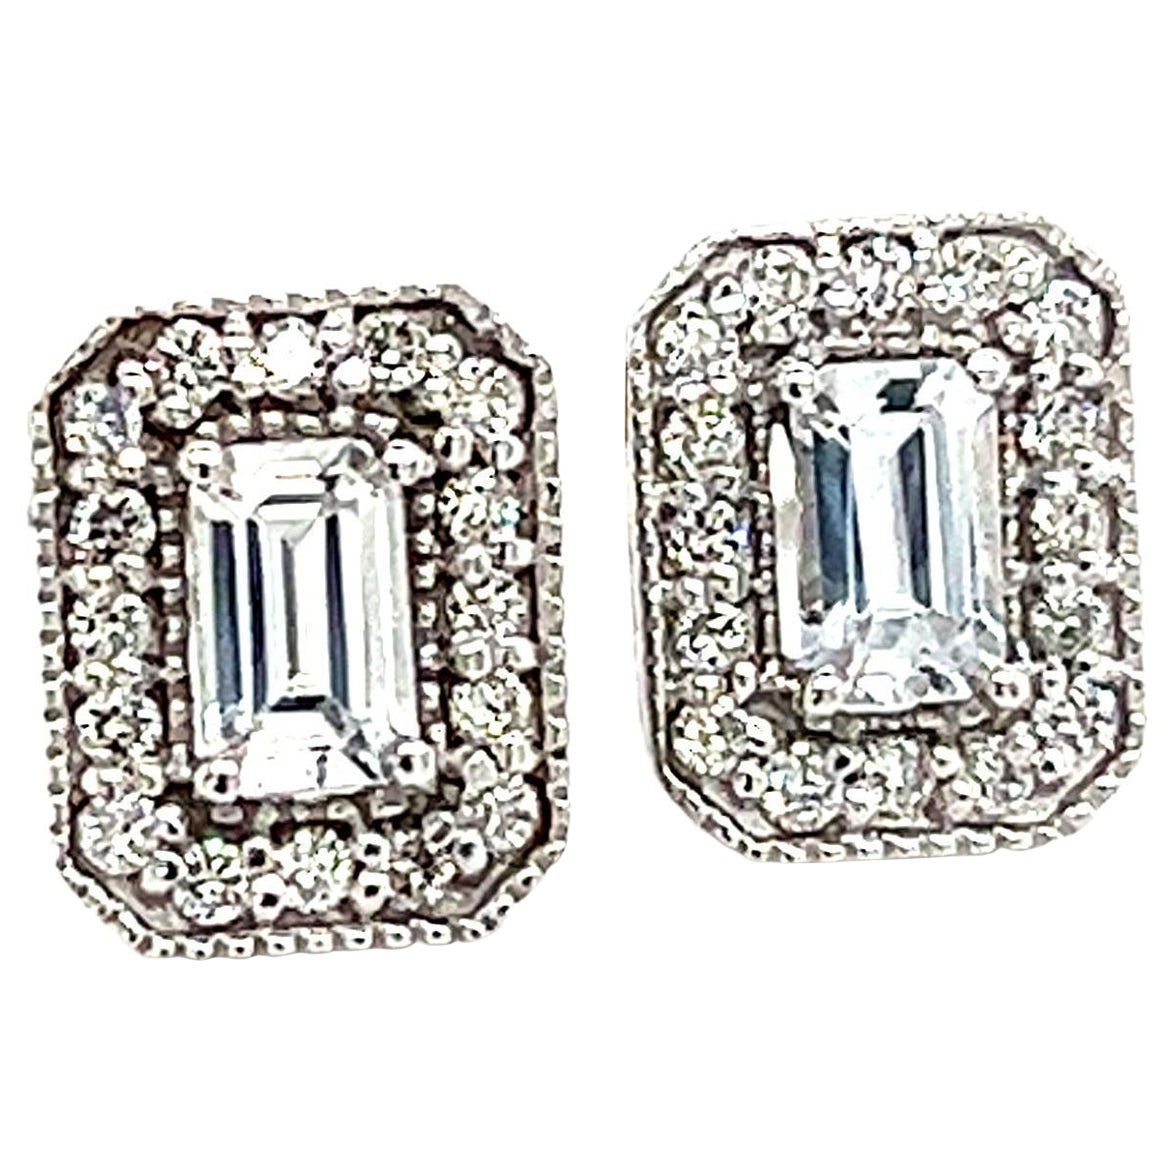 Natural Sapphire Diamond Stud Earrings 14k W Gold 0.96 TCW Certified For Sale